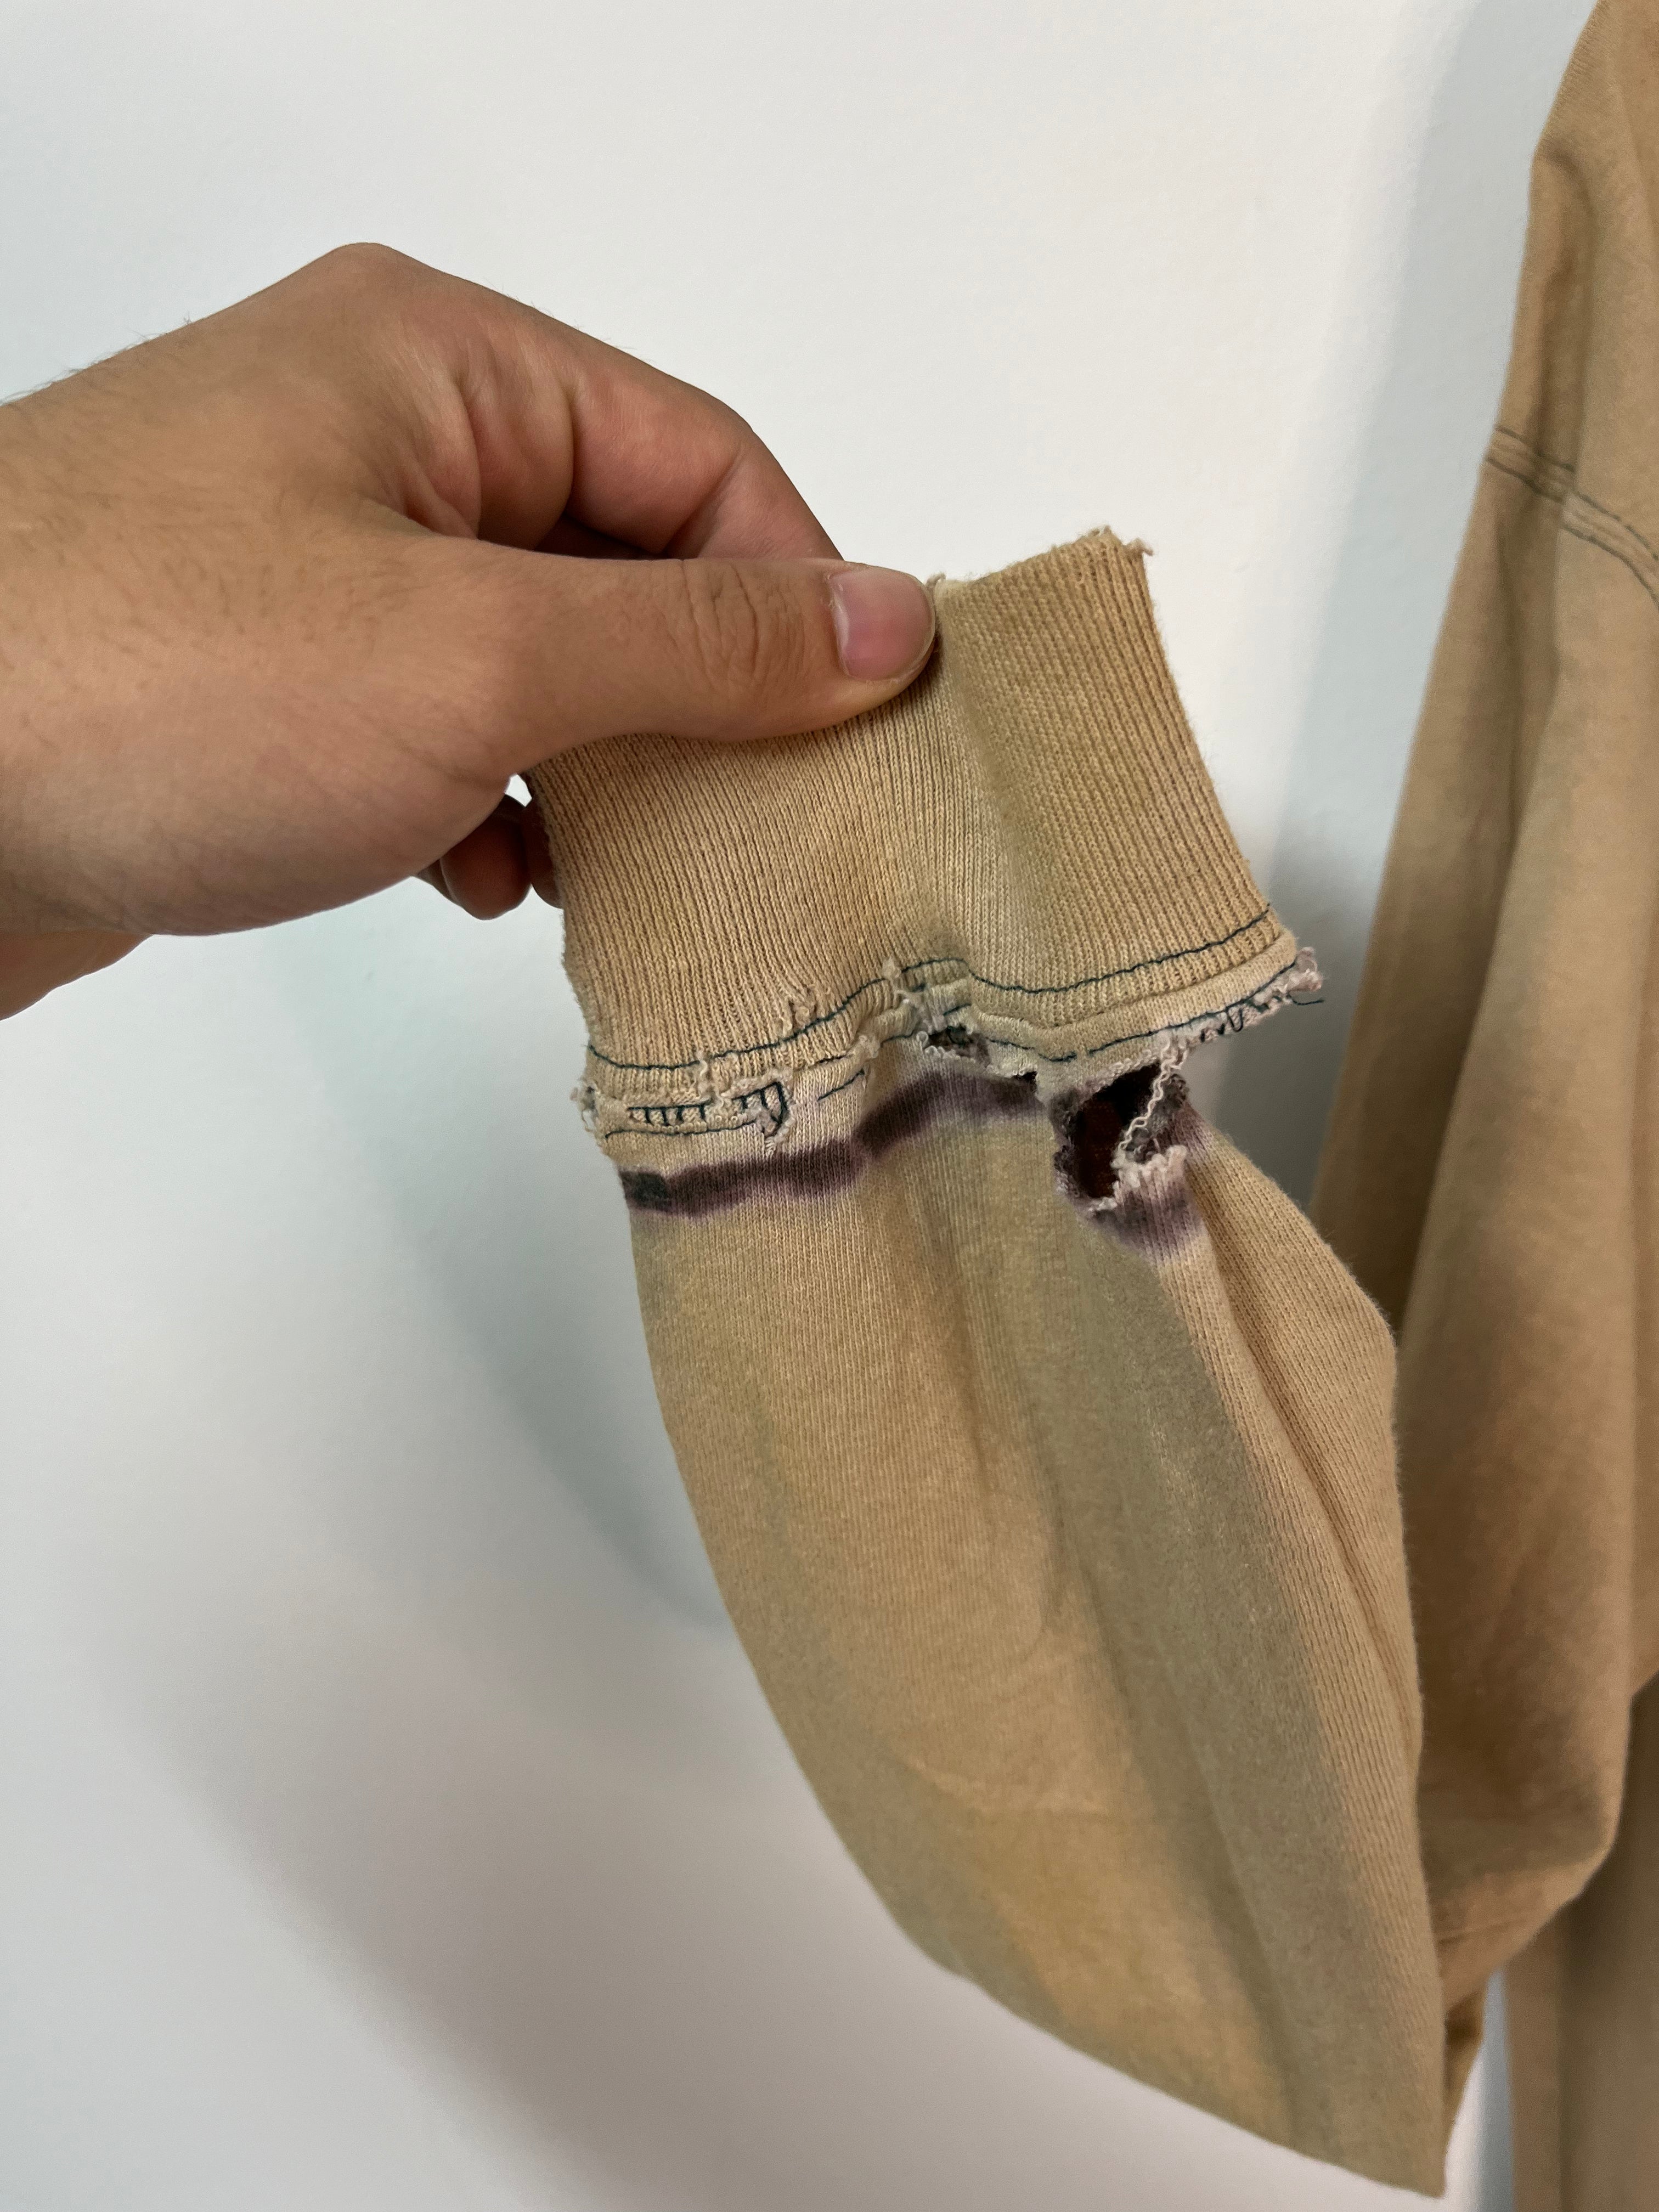 Custom Made Carhartt Distressed Longsleeve Bleached Distressed T-Shirt - Tan/Sand - L/XL